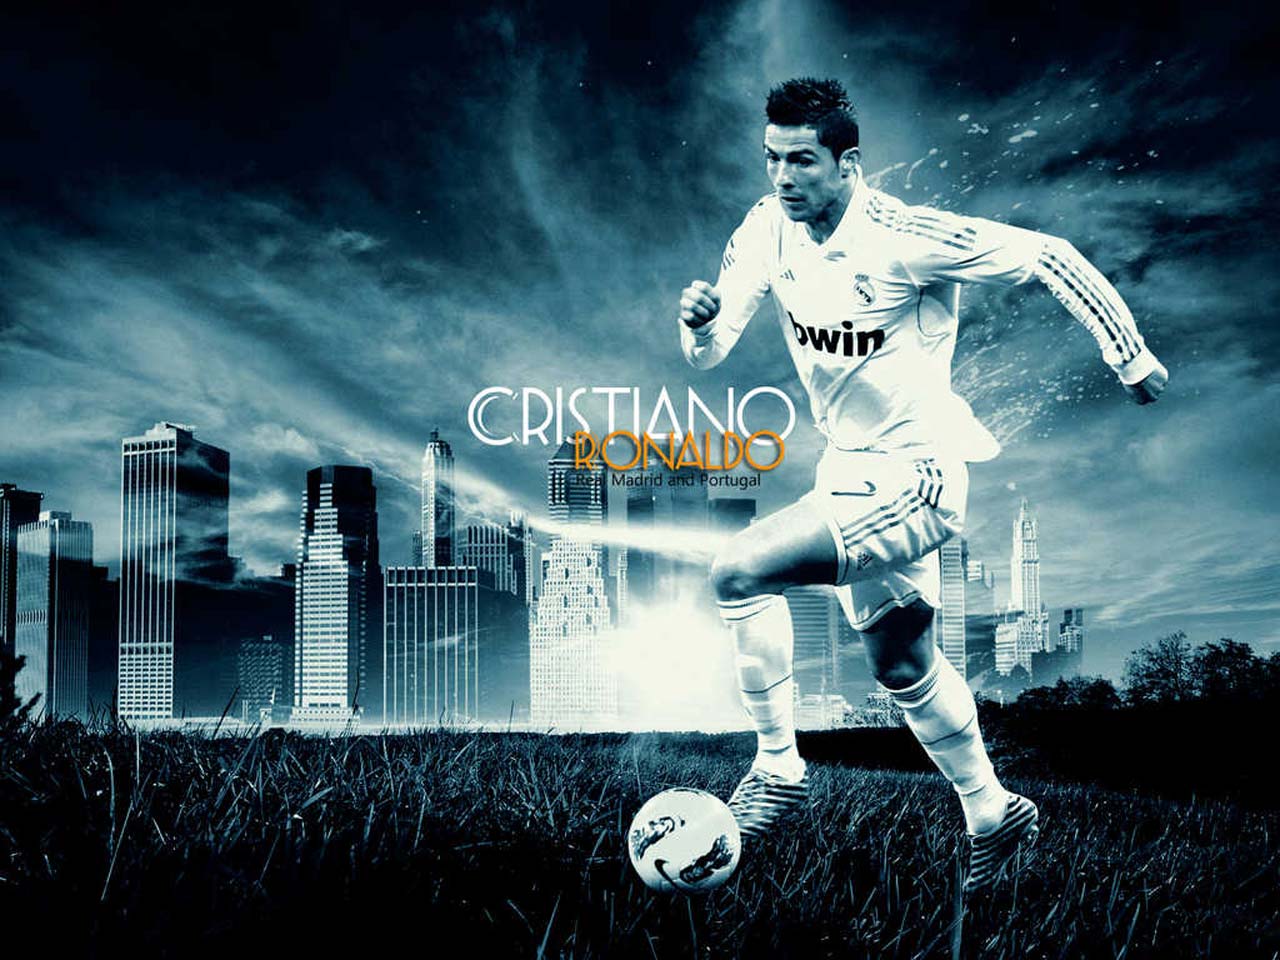 Cristiano Ronaldo Wallpaper Photo. Download High Quality